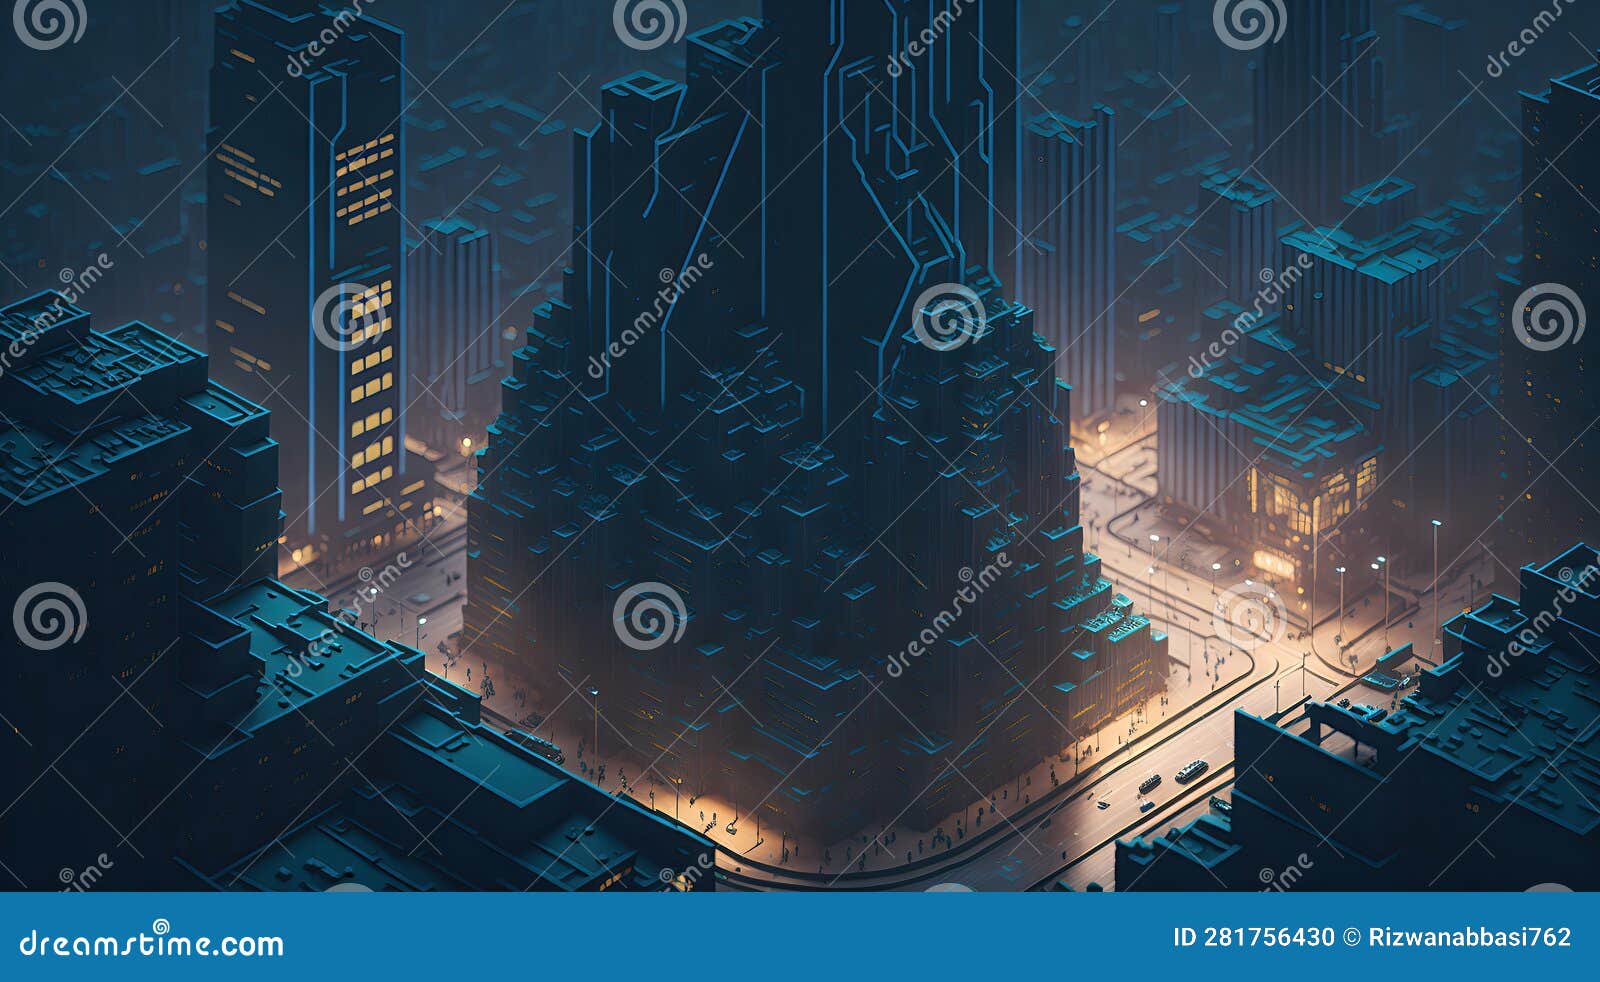 bring to life a futuristic isometric cityscape